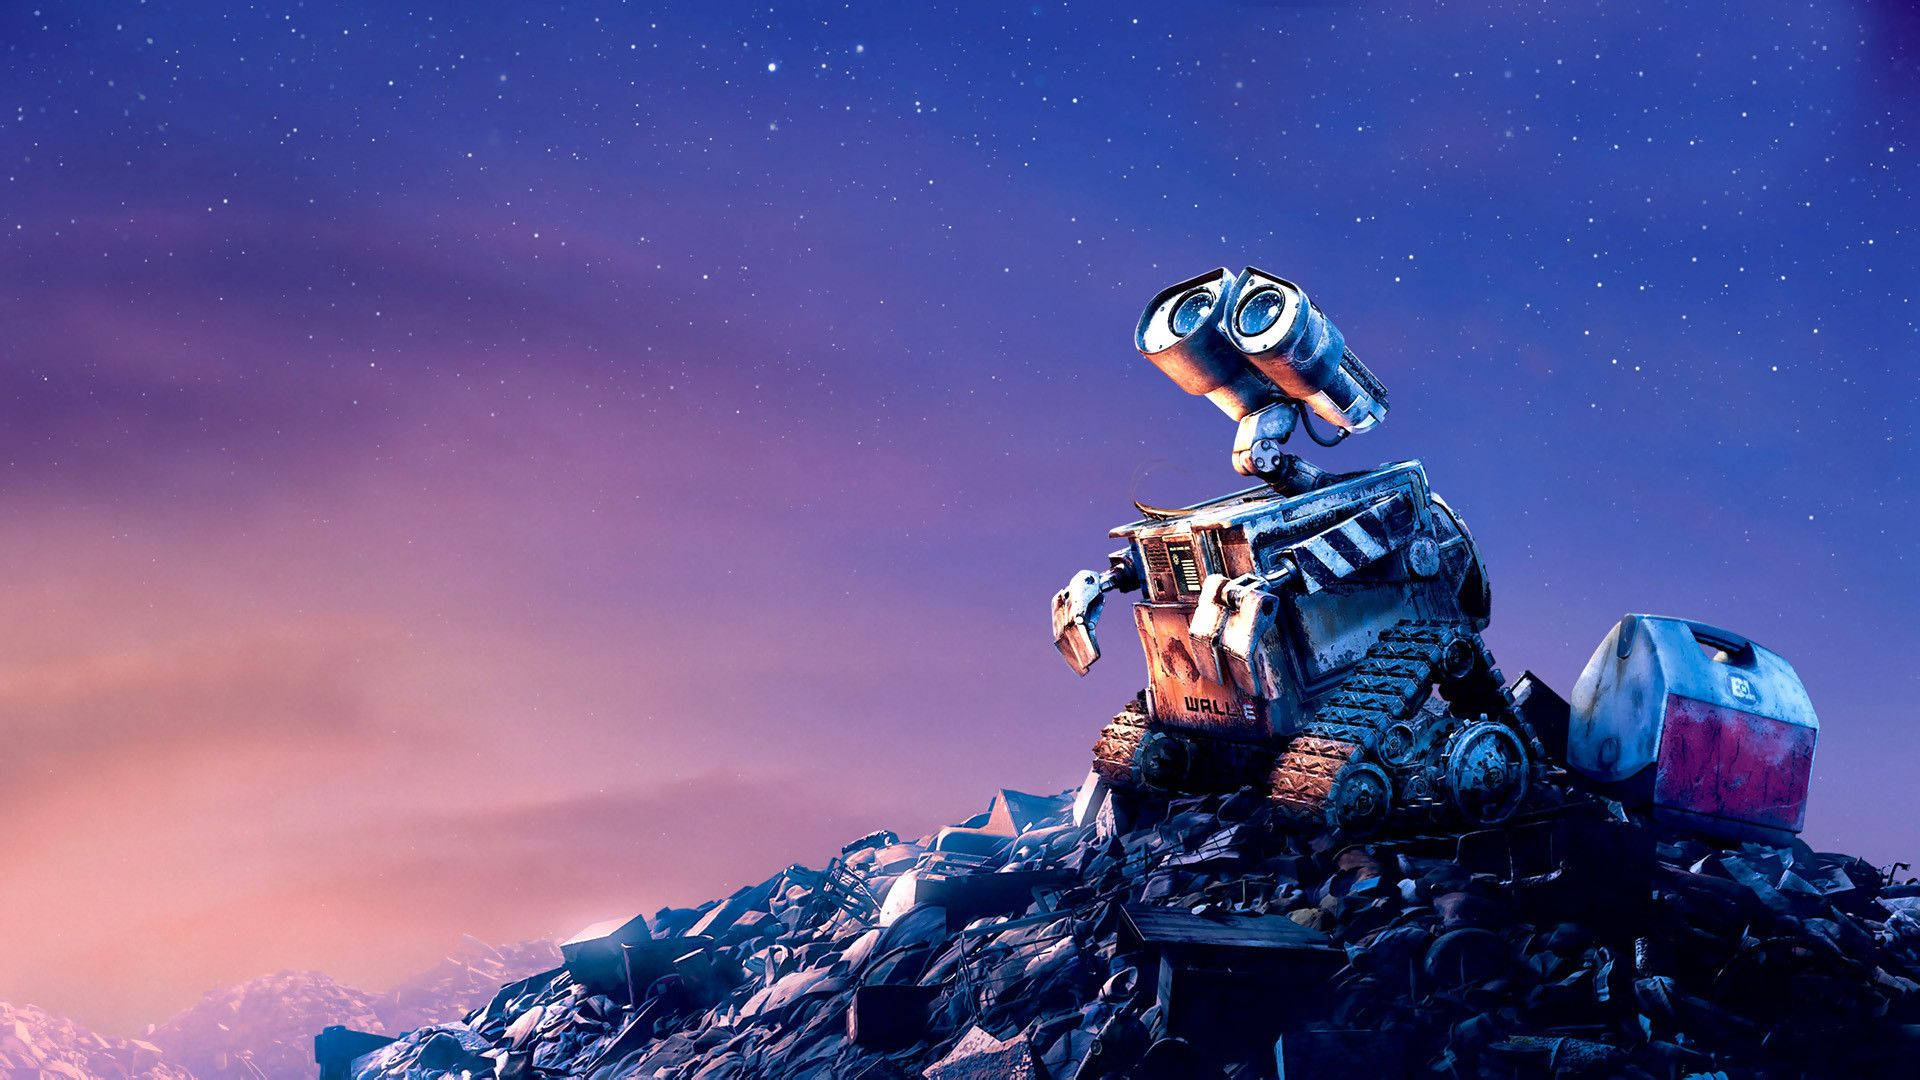 Wall-e Movie Digital Cover Wallpaper